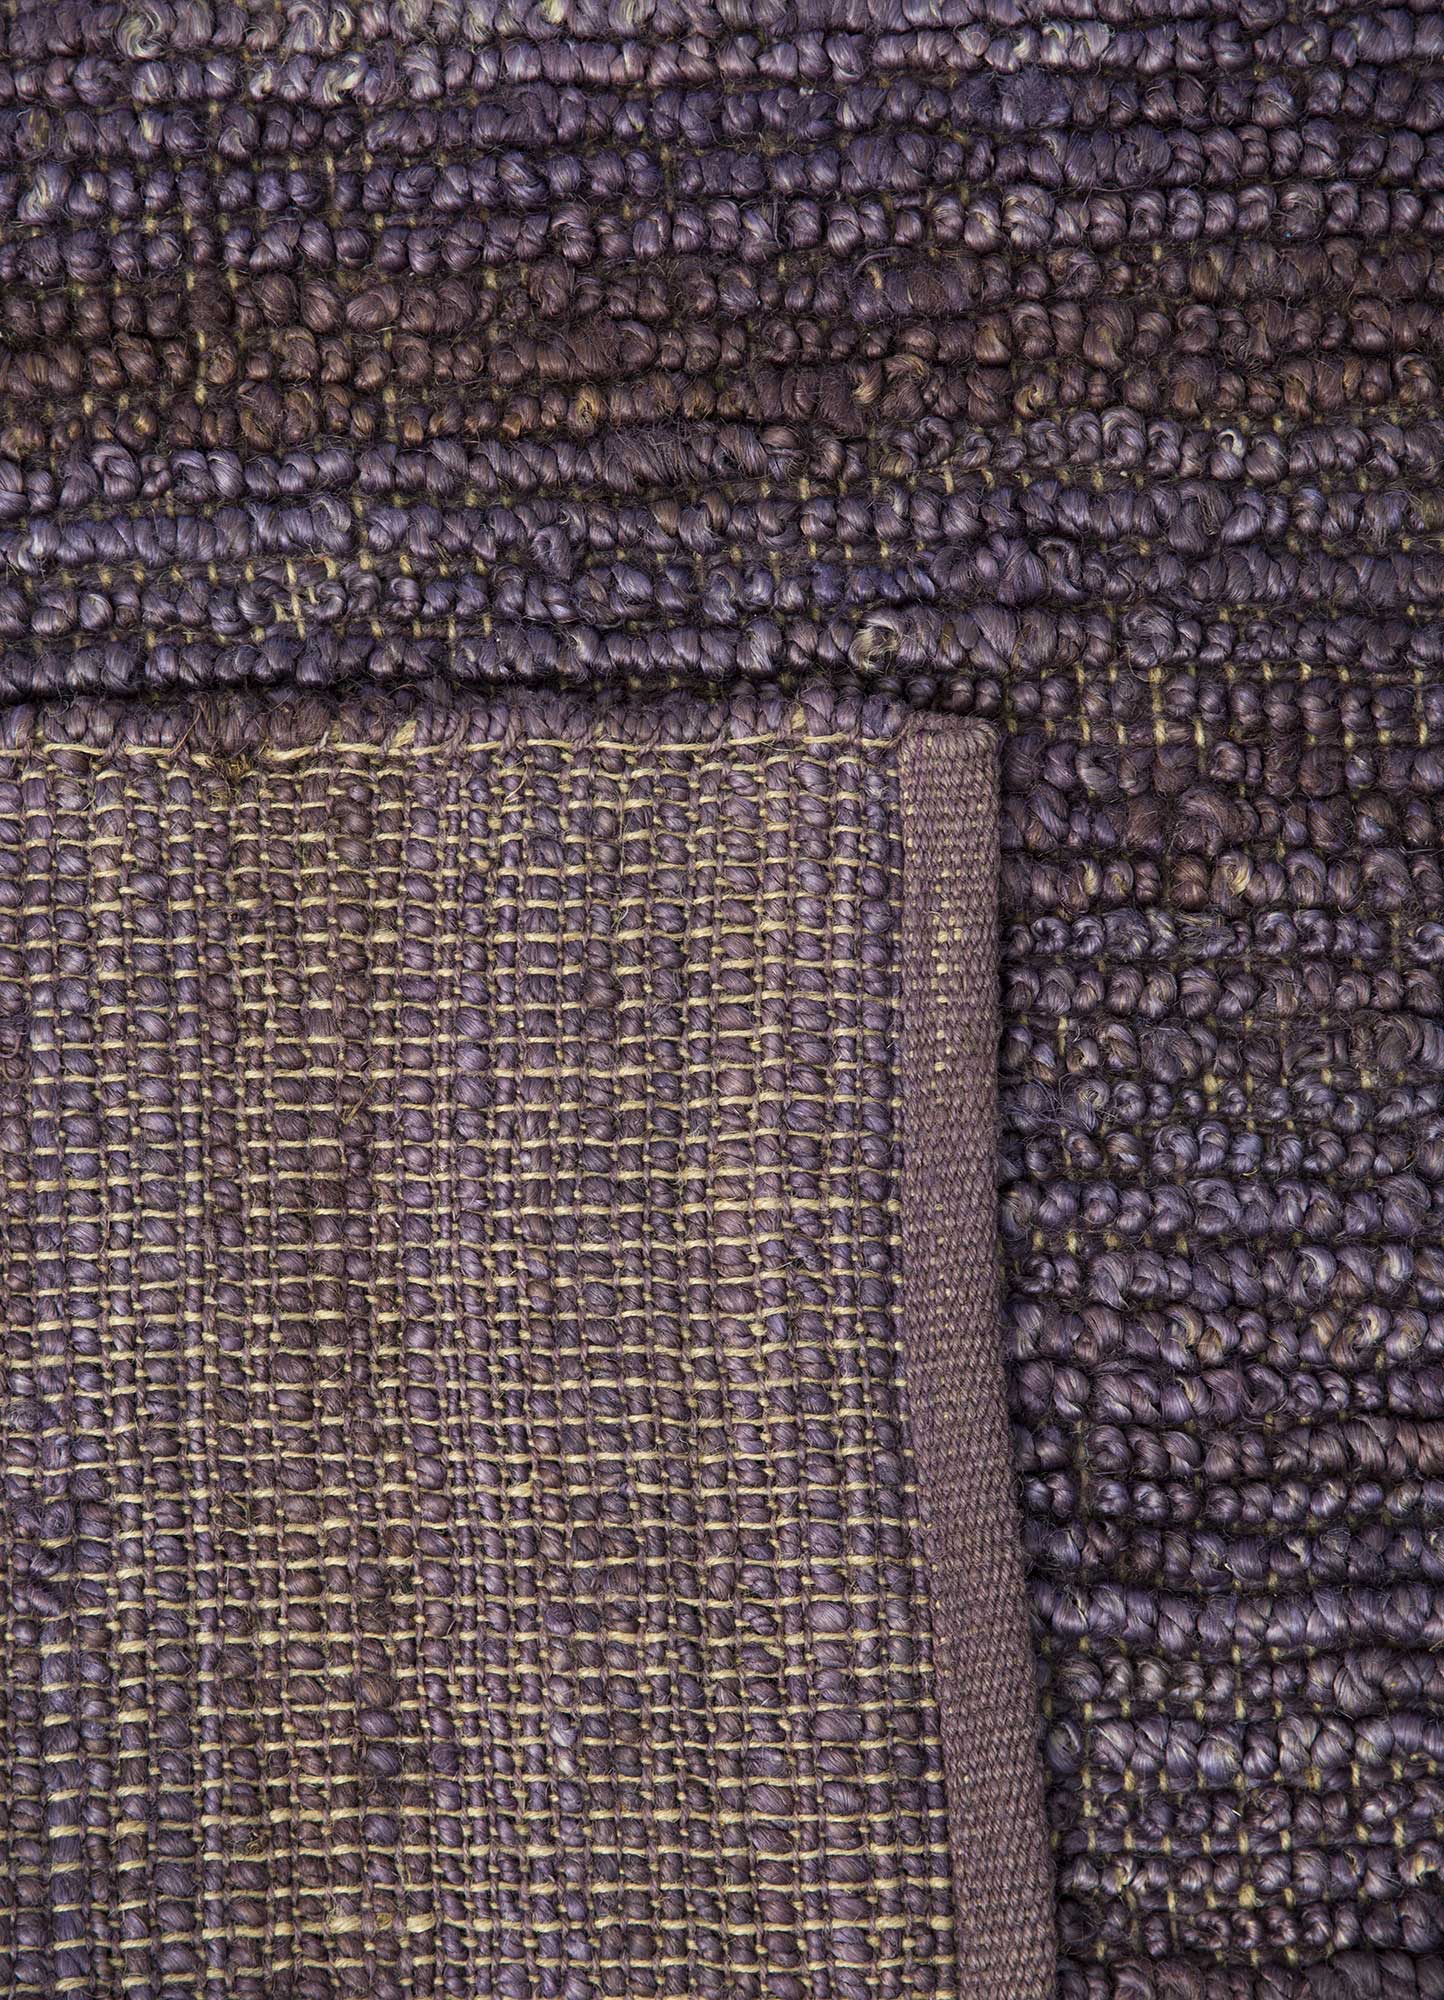 abrash pink and purple jute and hemp flat weaves Rug - Perspective